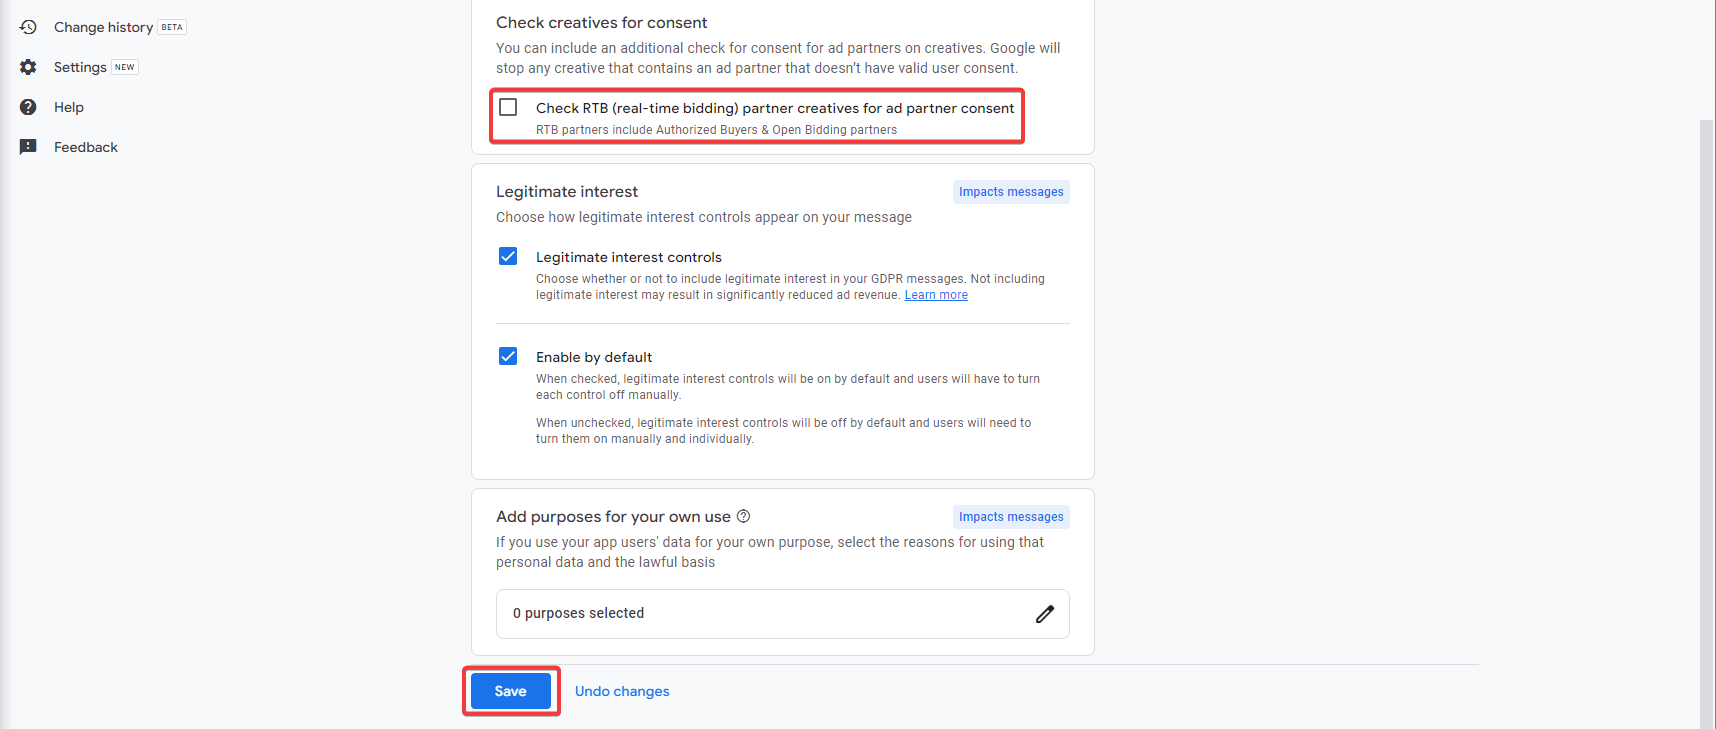 Google AdMob European regulations clicking Save button